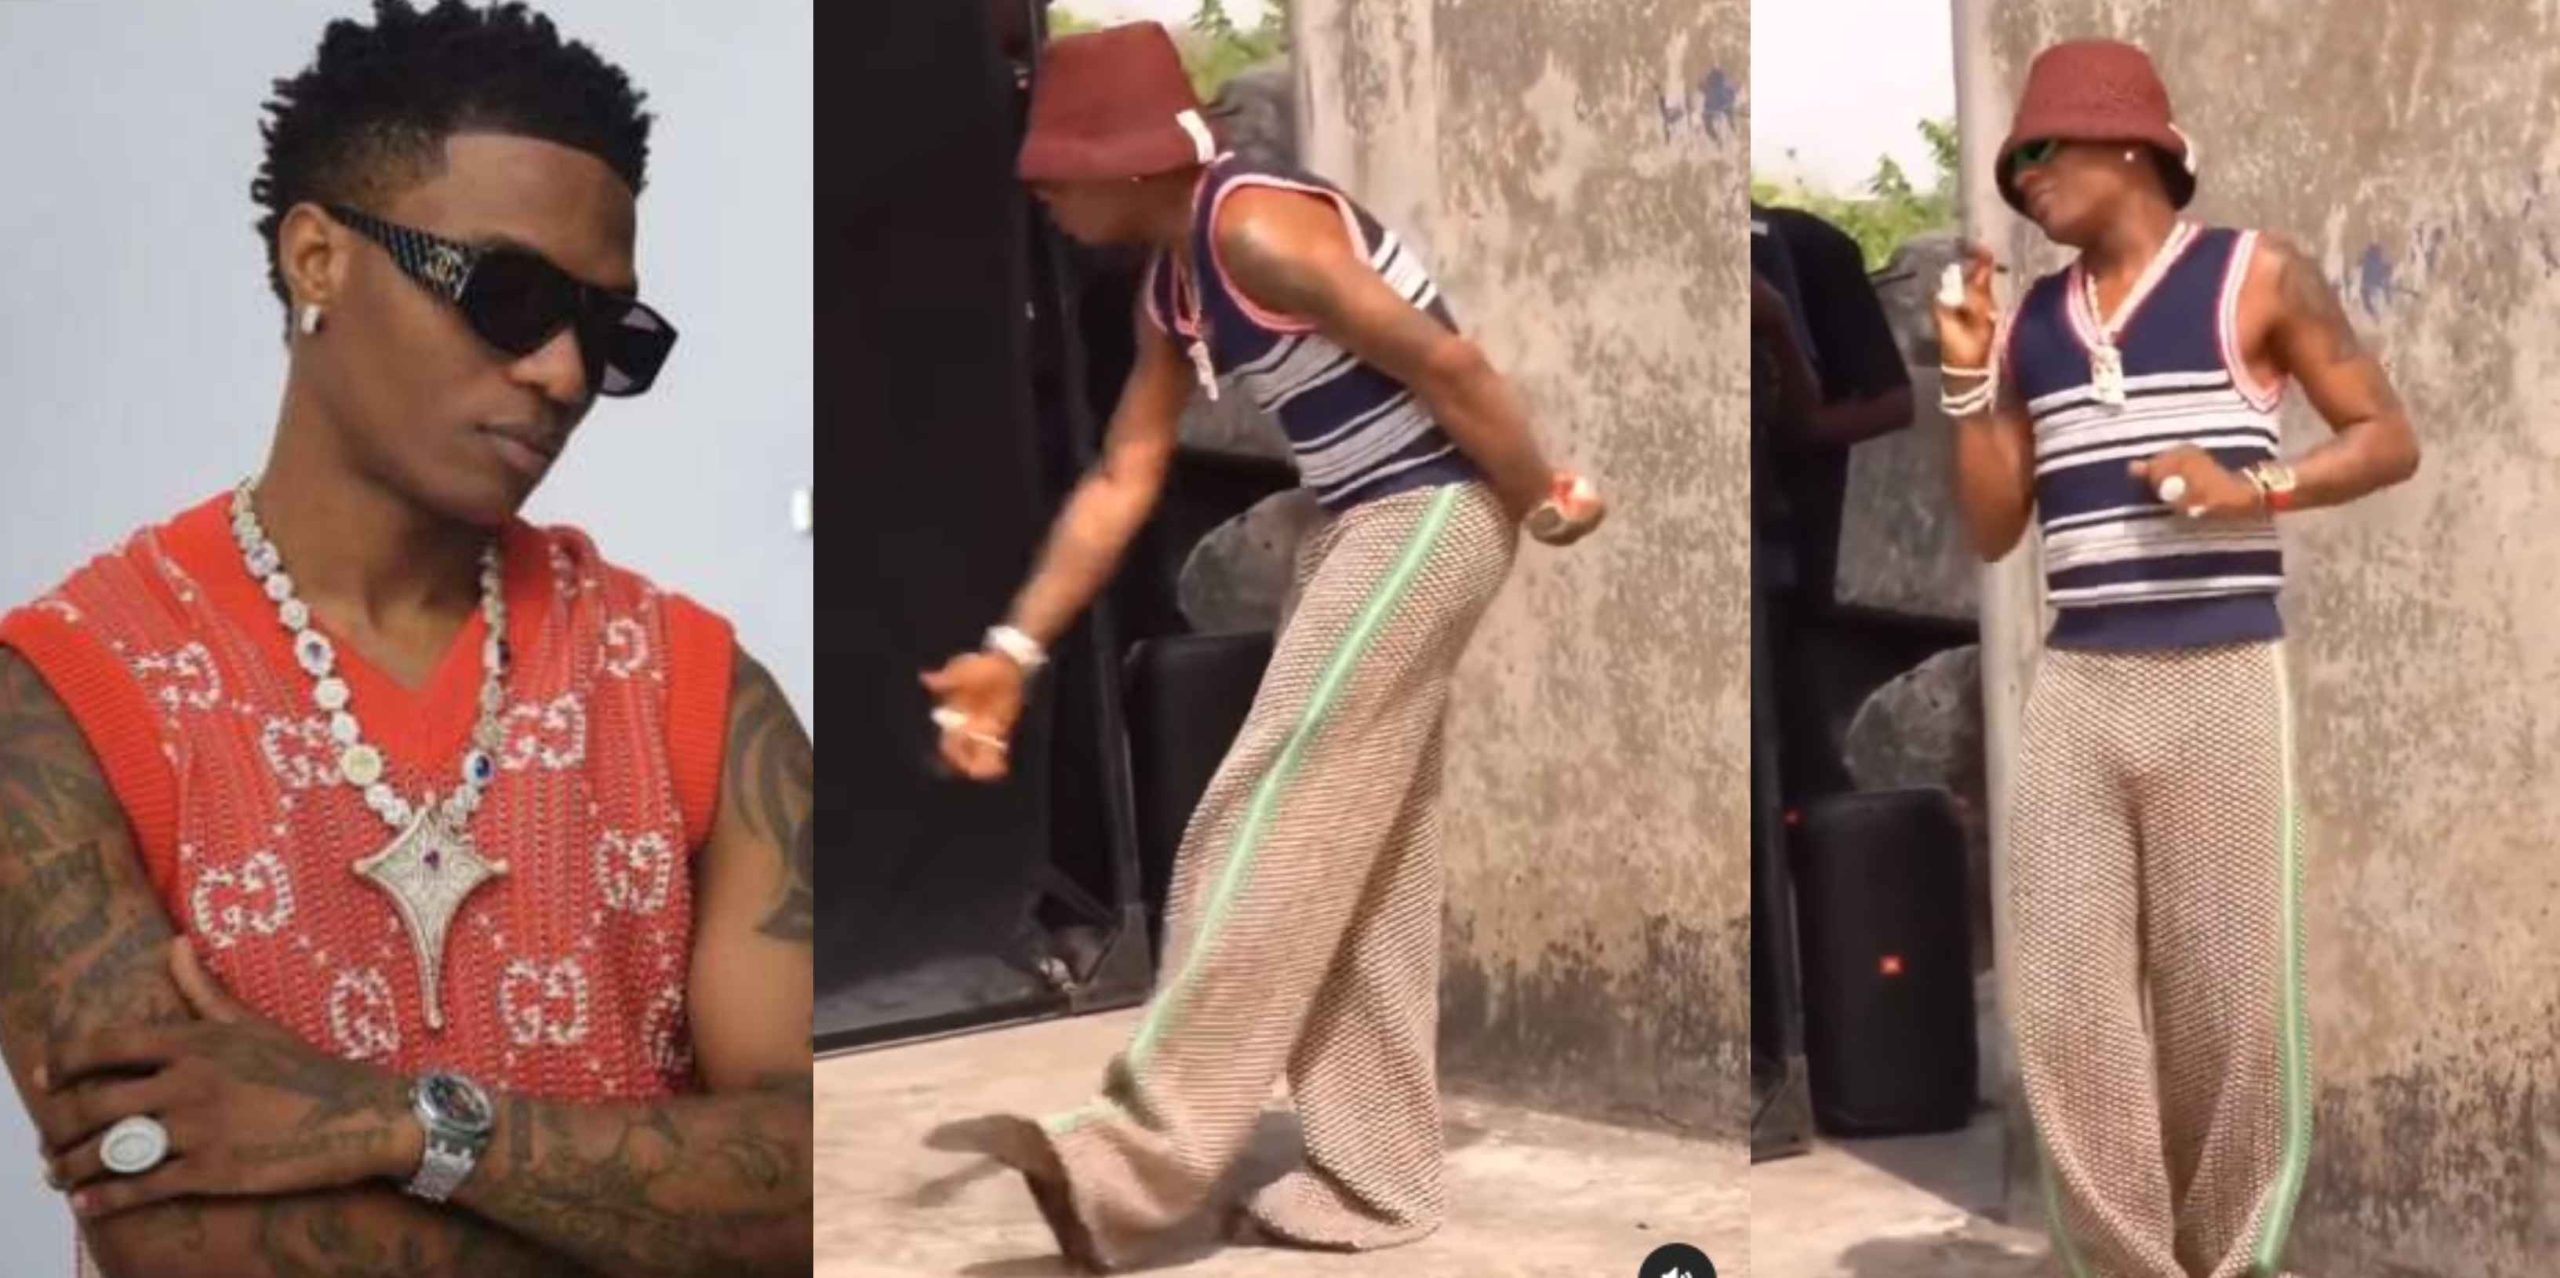 Singer Wizkid set social media abuzz with his unique dance moves